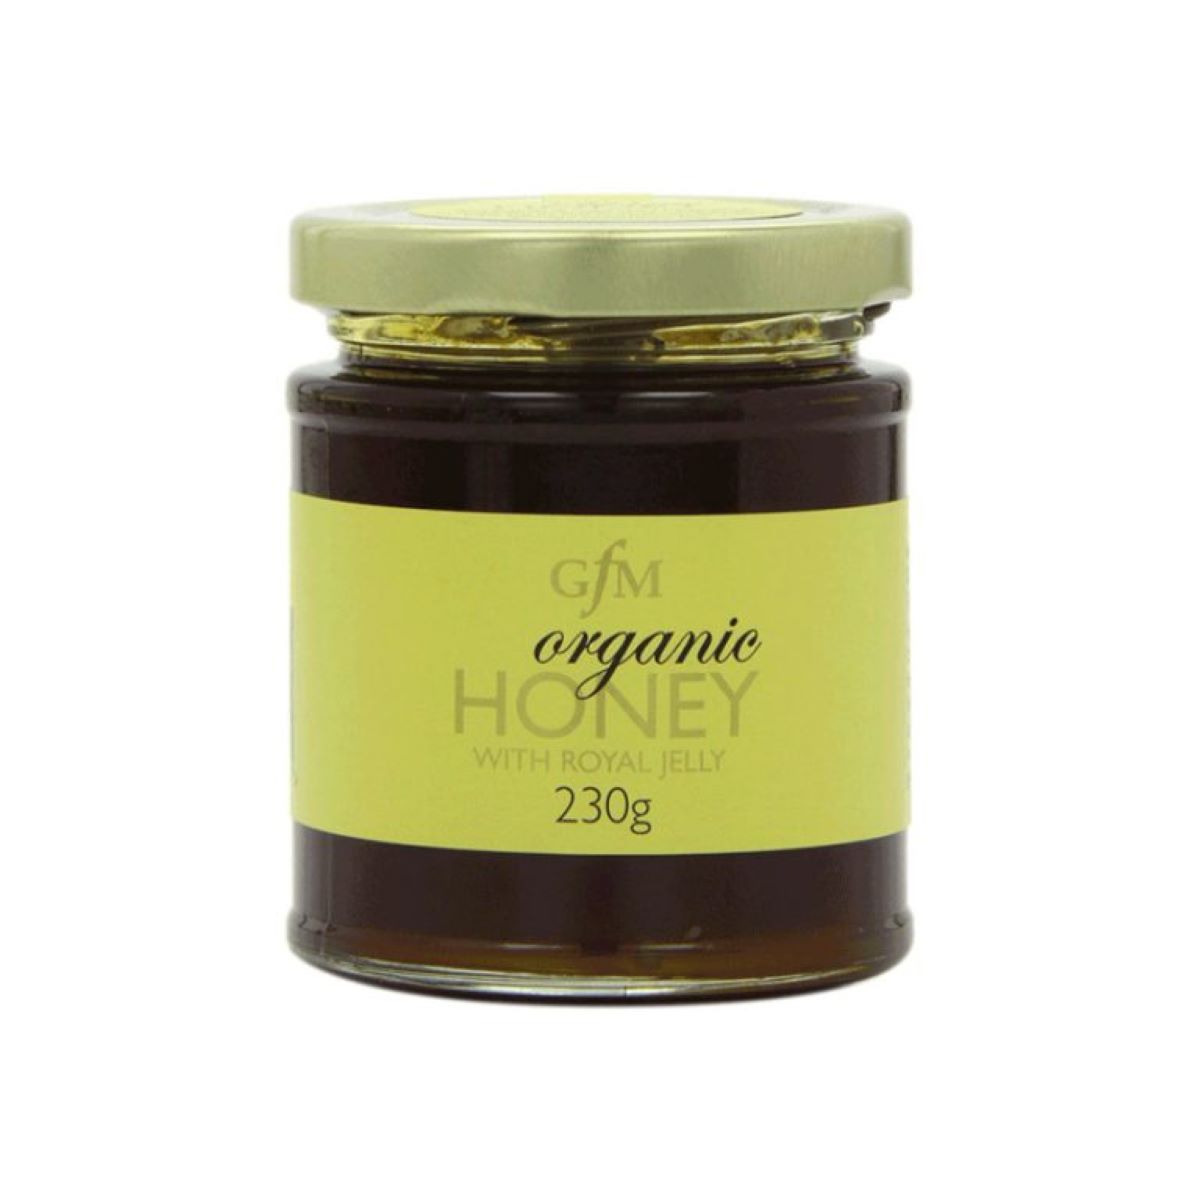 GfM Organic Honey With Royal Jelly 230g